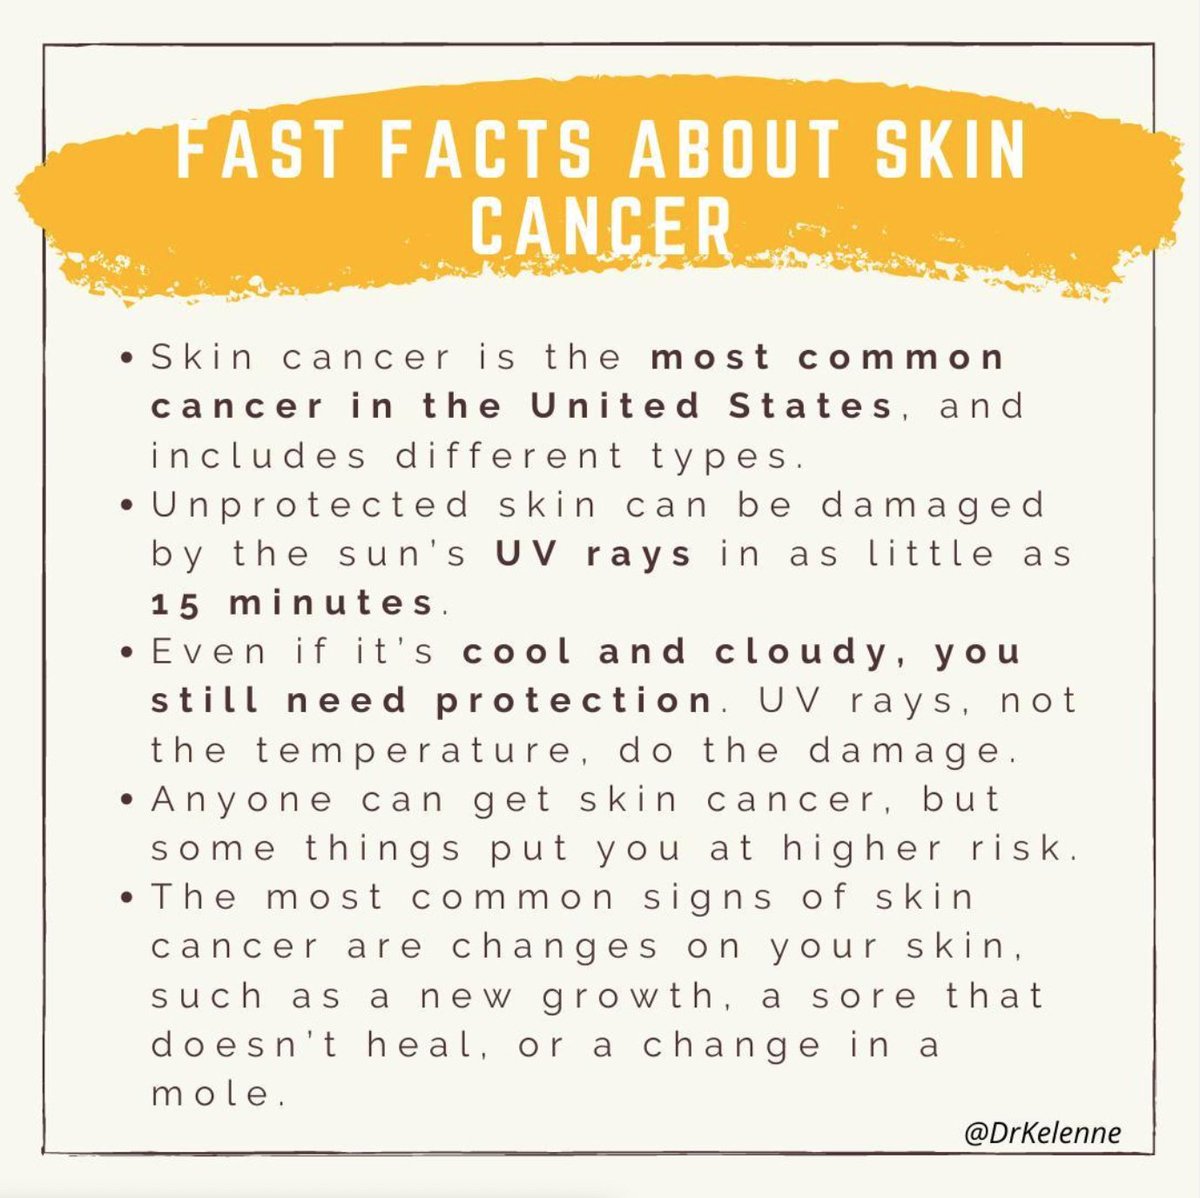 Fast Facts about skin cancer. Be informed. #healthcaretips #familymedicine #caribbean #blackdoctor #telemedicine #telehealth #yourcaribbeandoctor #skincancerawareness 🇹🇹🇻🇨🇵🇷🇦🇬🇧🇸🇧🇧🇧🇷🇨🇦🇫🇰🇬🇩🇬🇾🇯🇲🇭🇹🇱🇨🇰🇳